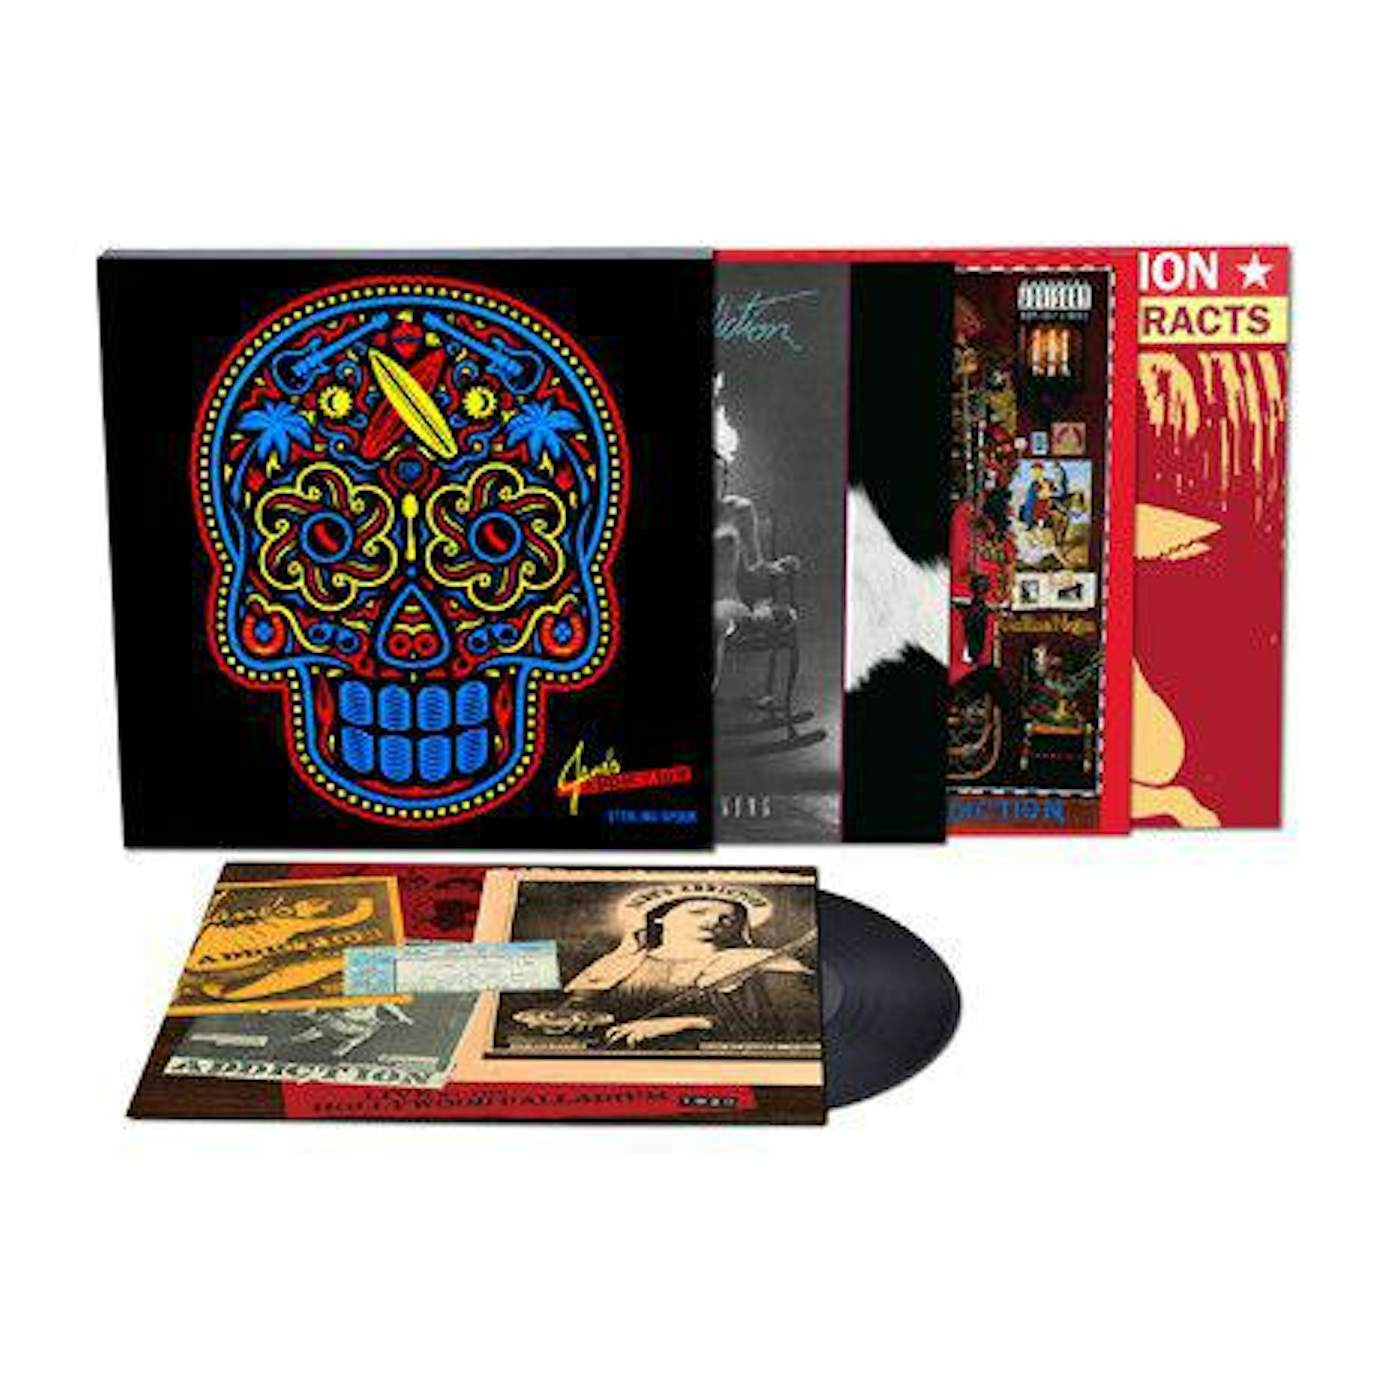 Jane's Addiction "Sterling Spoon" Limited Edition Six-LP Box Set (Vinyl)